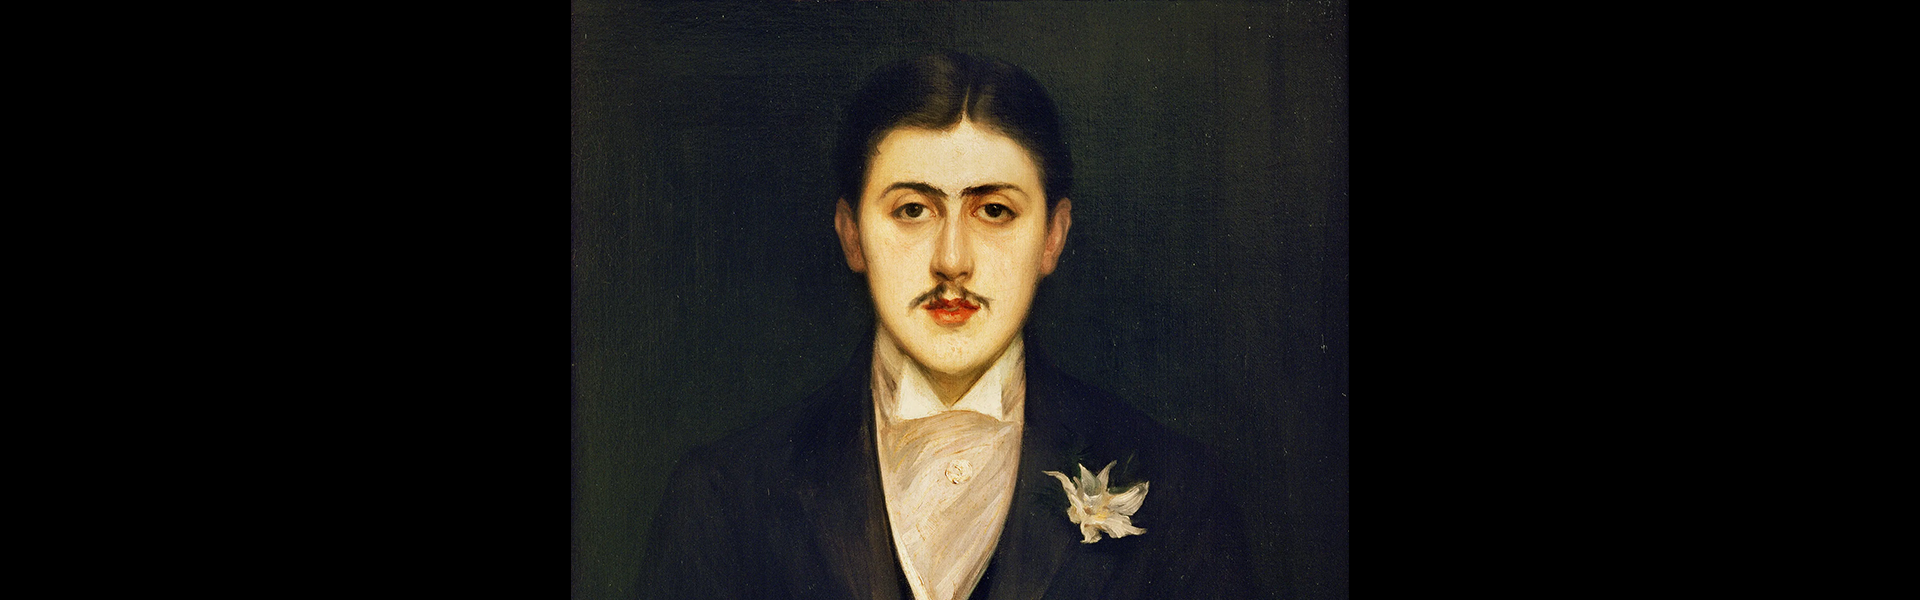 Le salon de Proust - In search of lost time